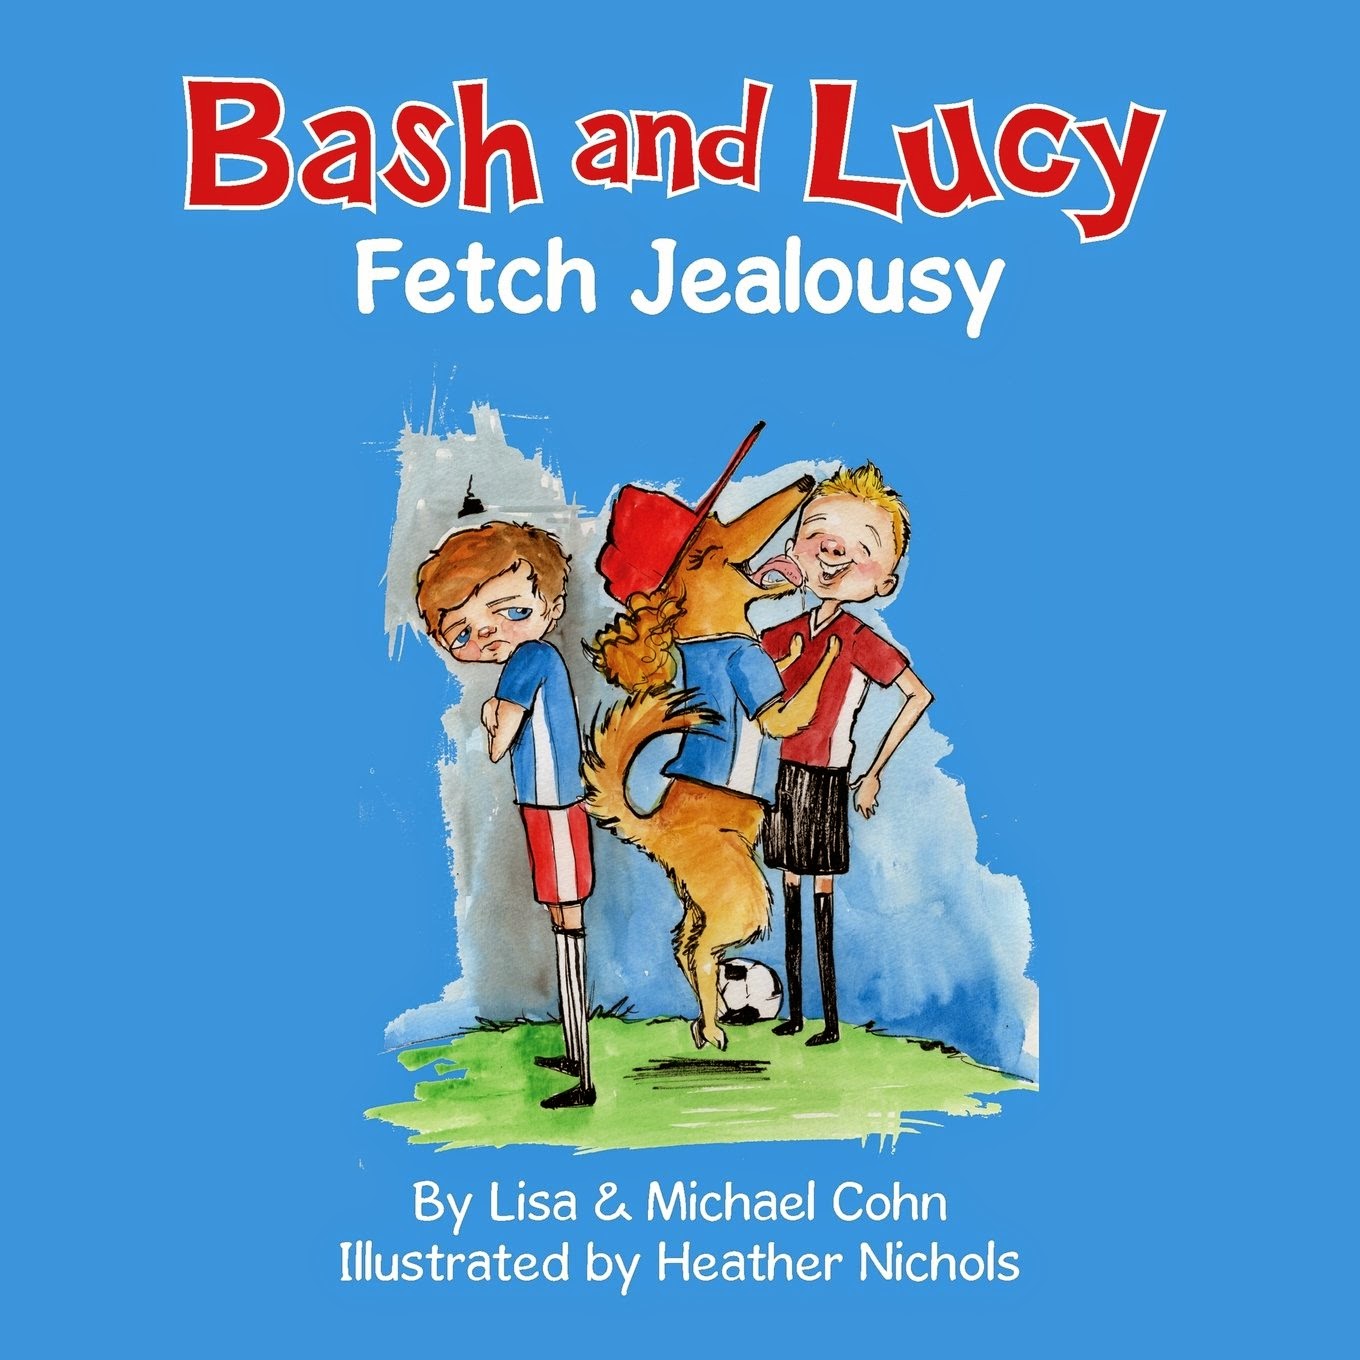 http://www.amazon.com/Bash-Lucy-Fetch-Jealousy-Lisa/dp/0692332111/ref=sr_1_1?s=books&ie=UTF8&qid=1426196254&sr=1-1&keywords=bash+and+lucy+fetch+jealousy